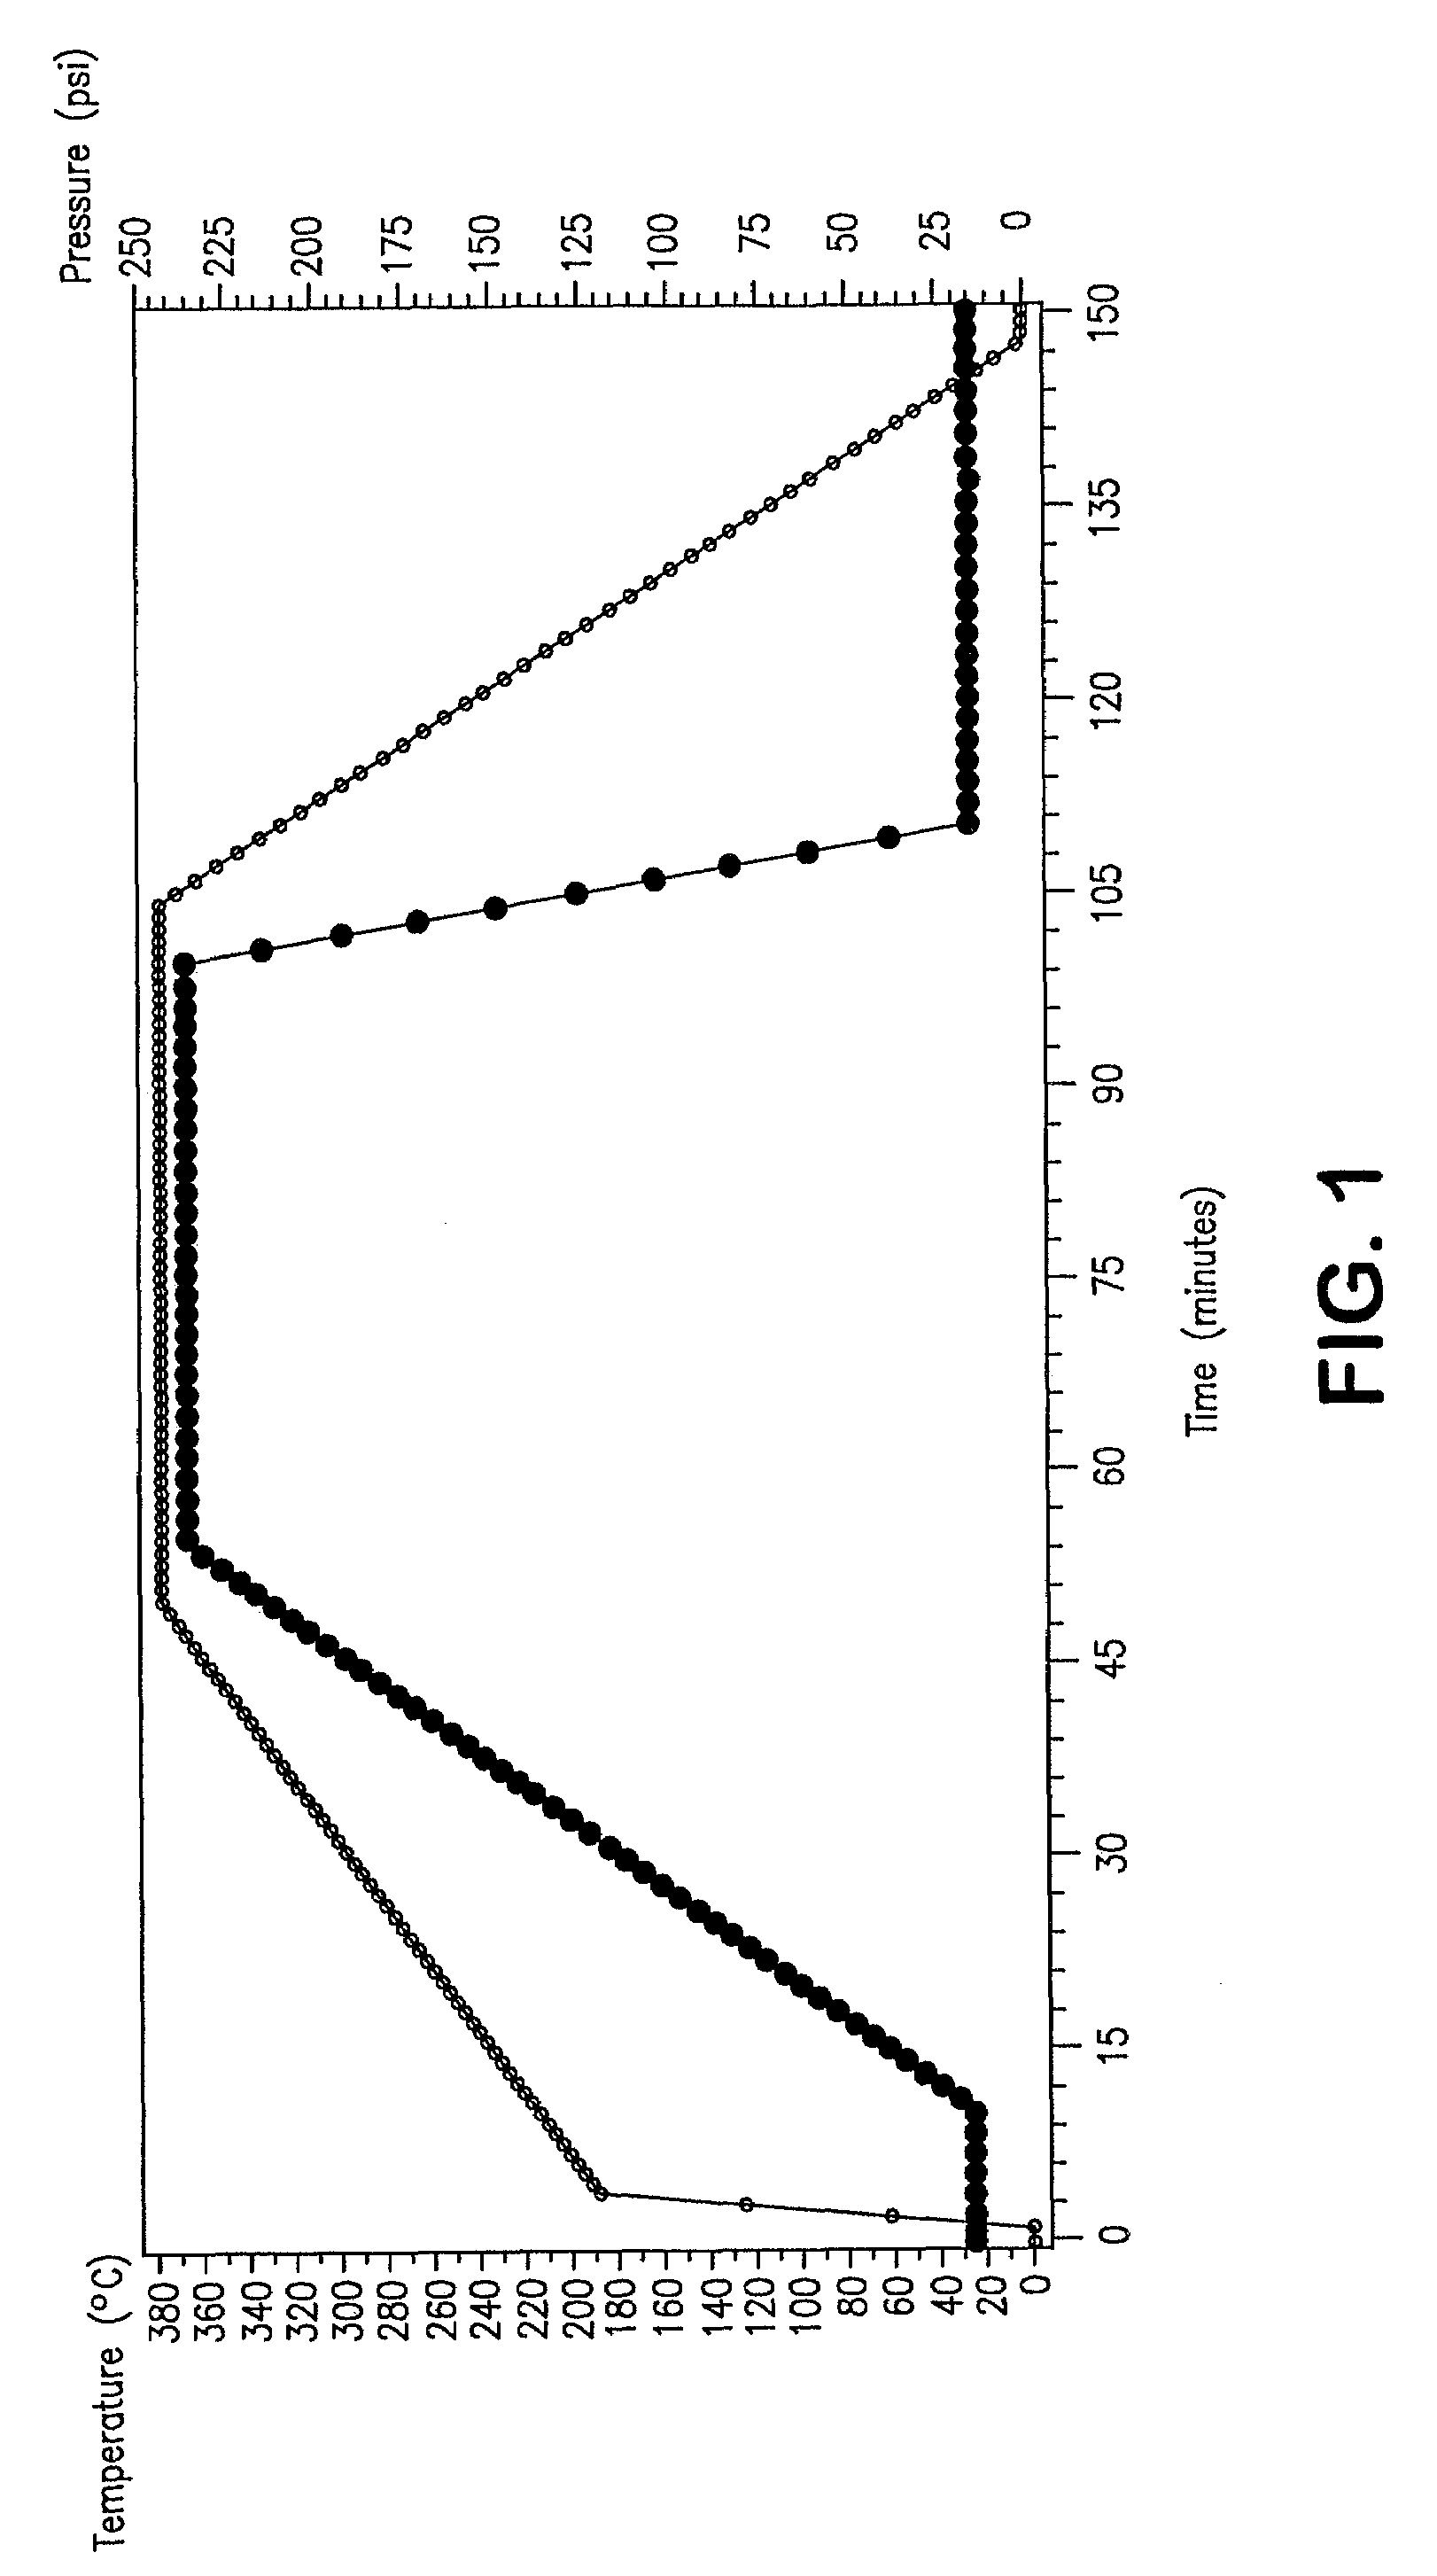 Fluoropolymer barrier material